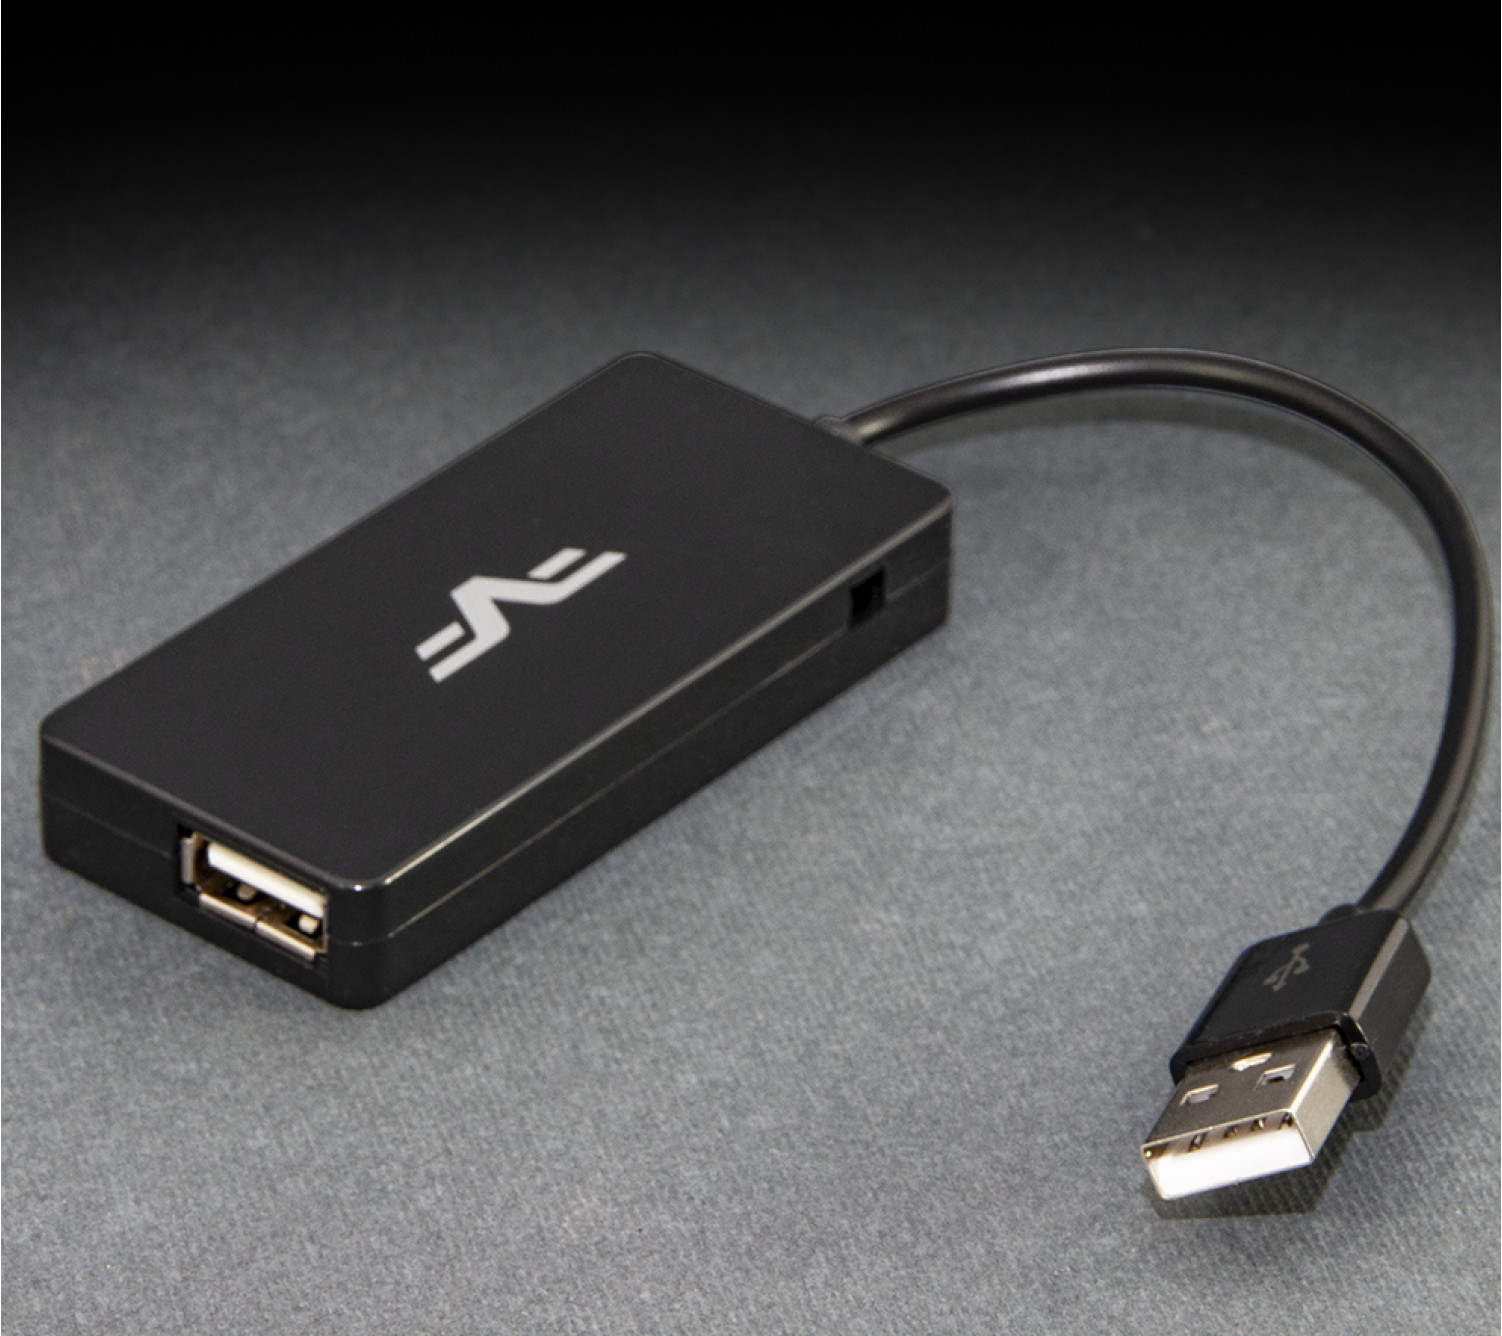 USB-хаб Frime 4-х портовий 2.0 Black (FH-20030)